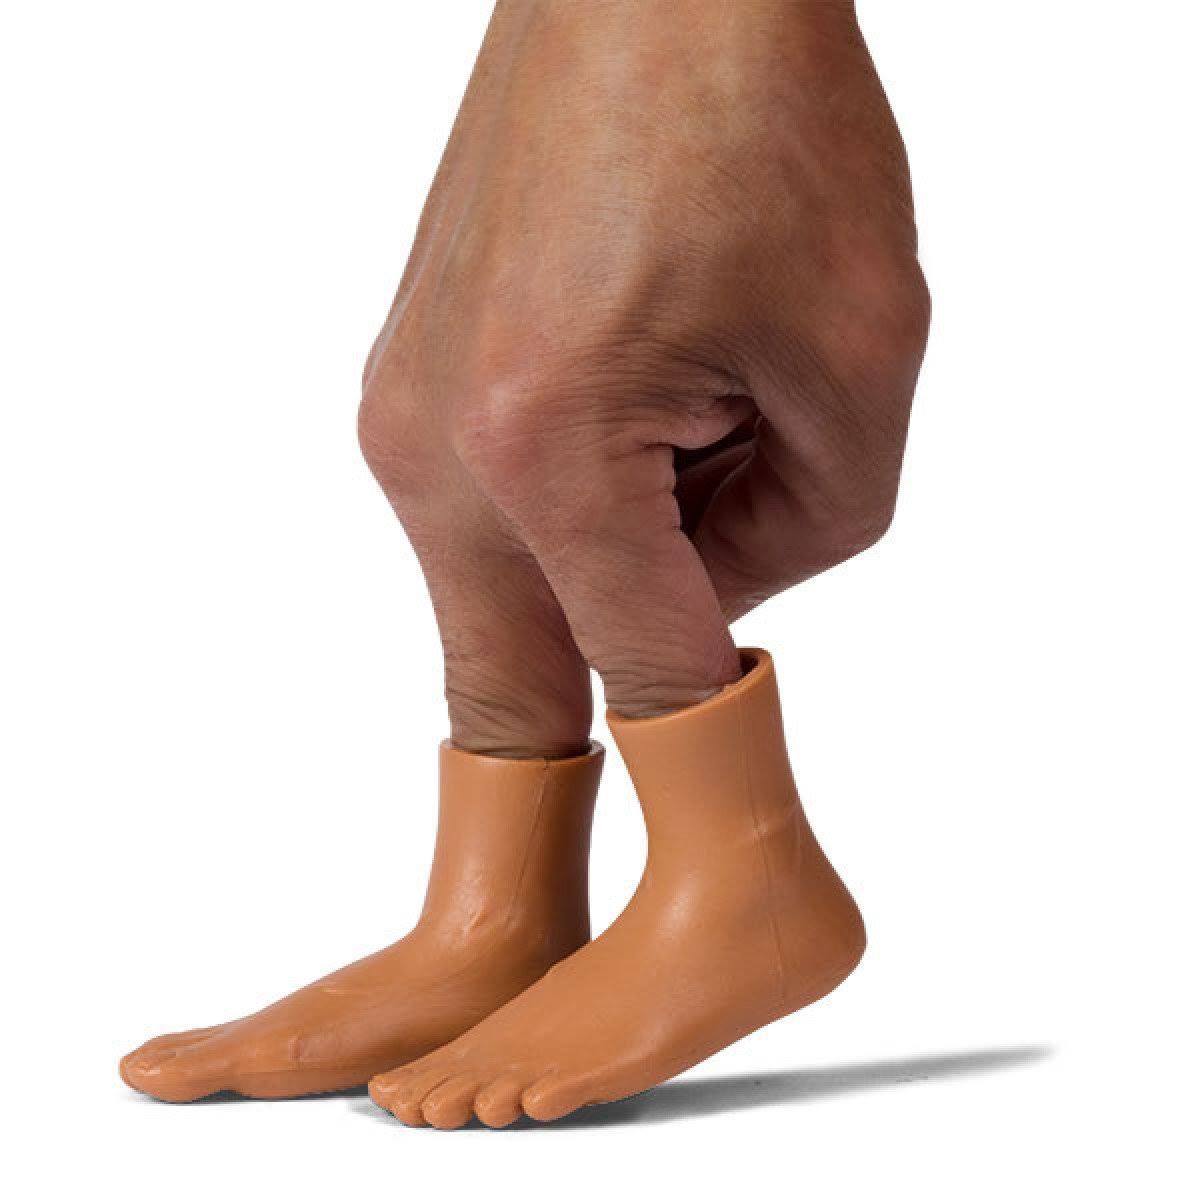 Archie McPhee – Finger Feet